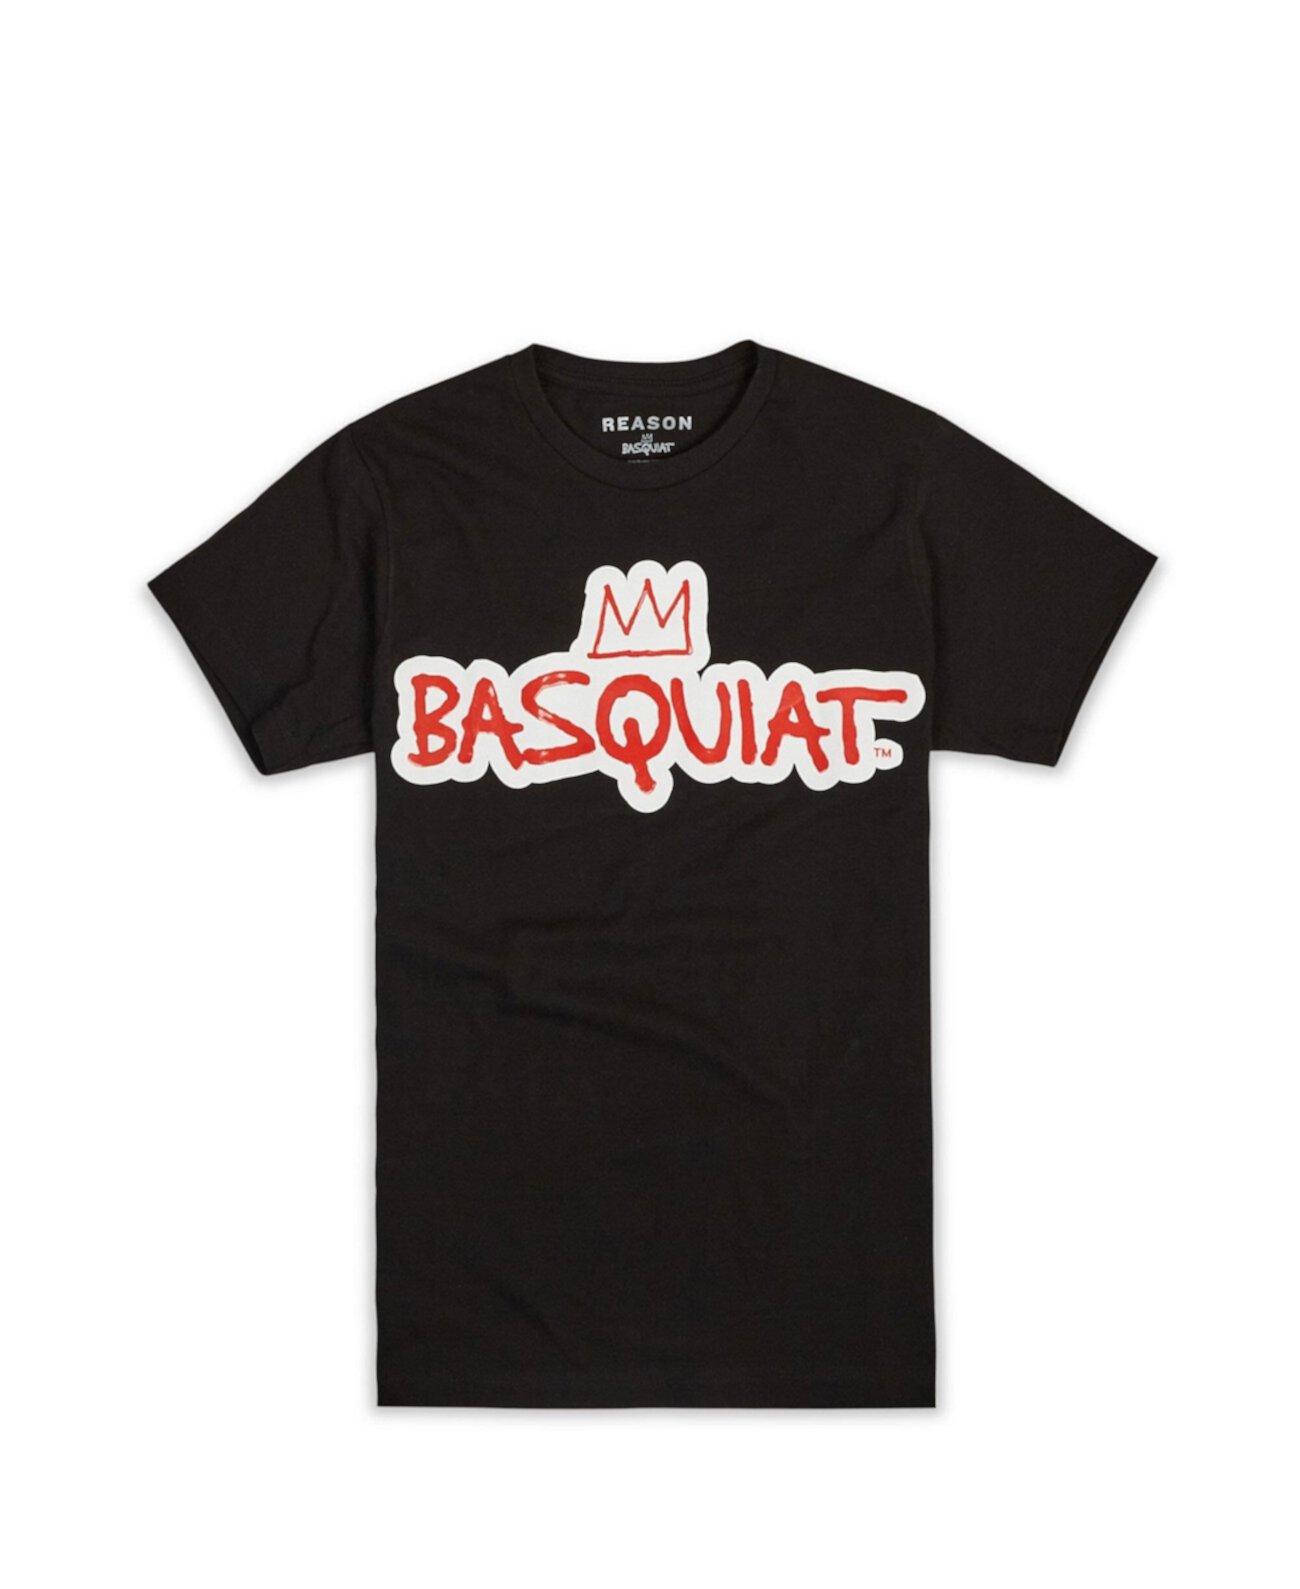 Мужская футболка Big & Tall Basquiat Reason